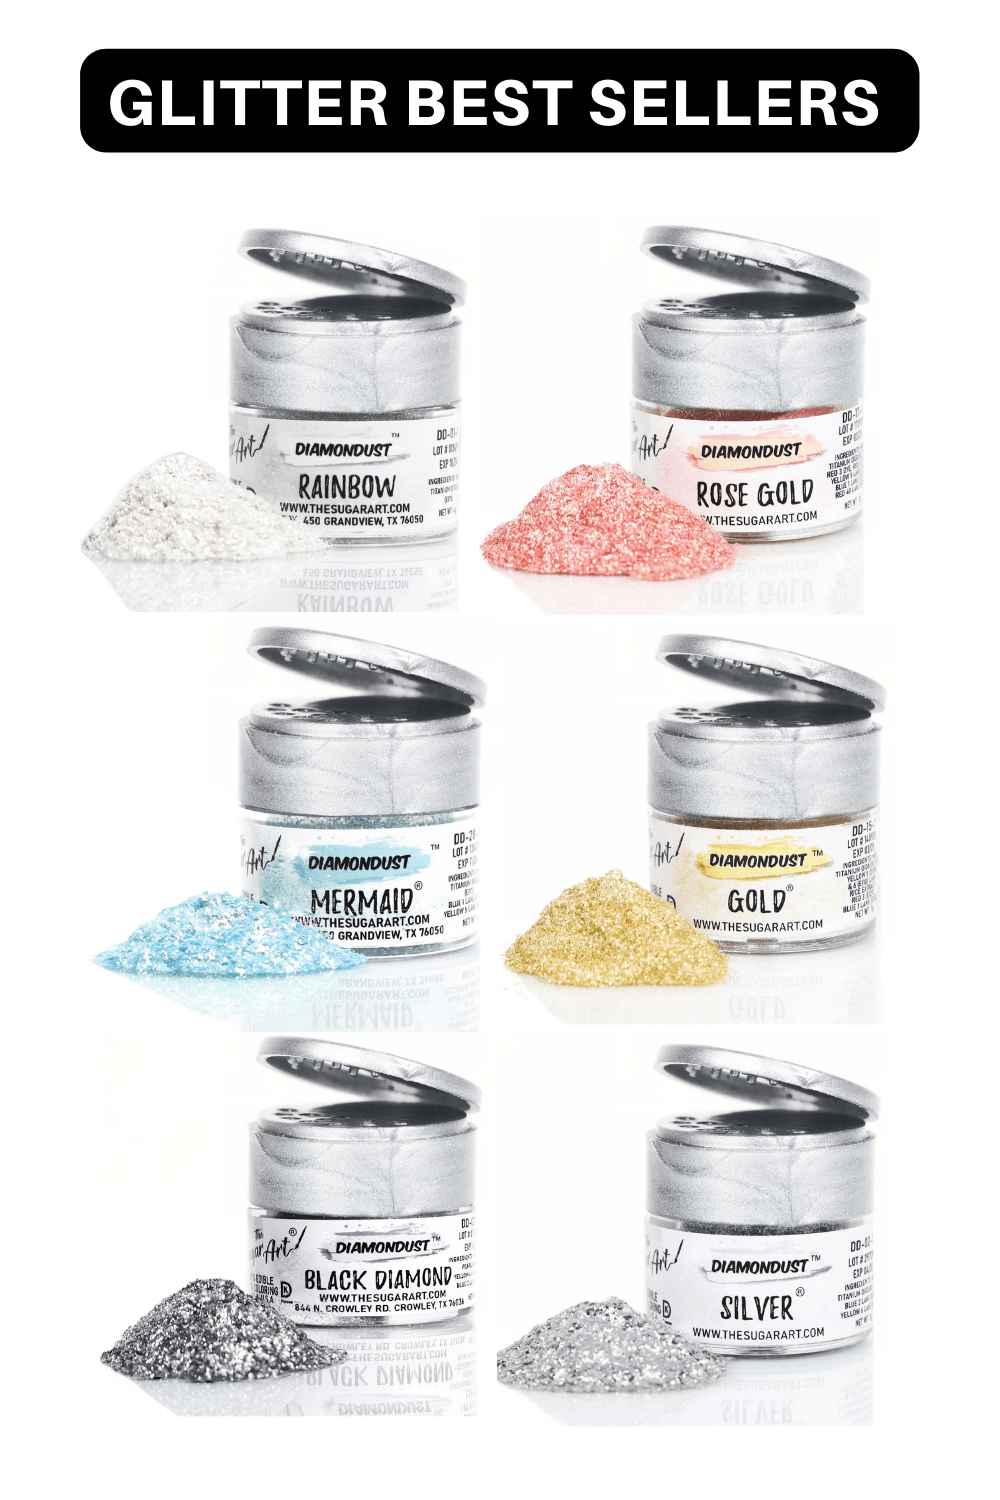 White Diamond Edible Glitter - The Sugar Art, Inc.